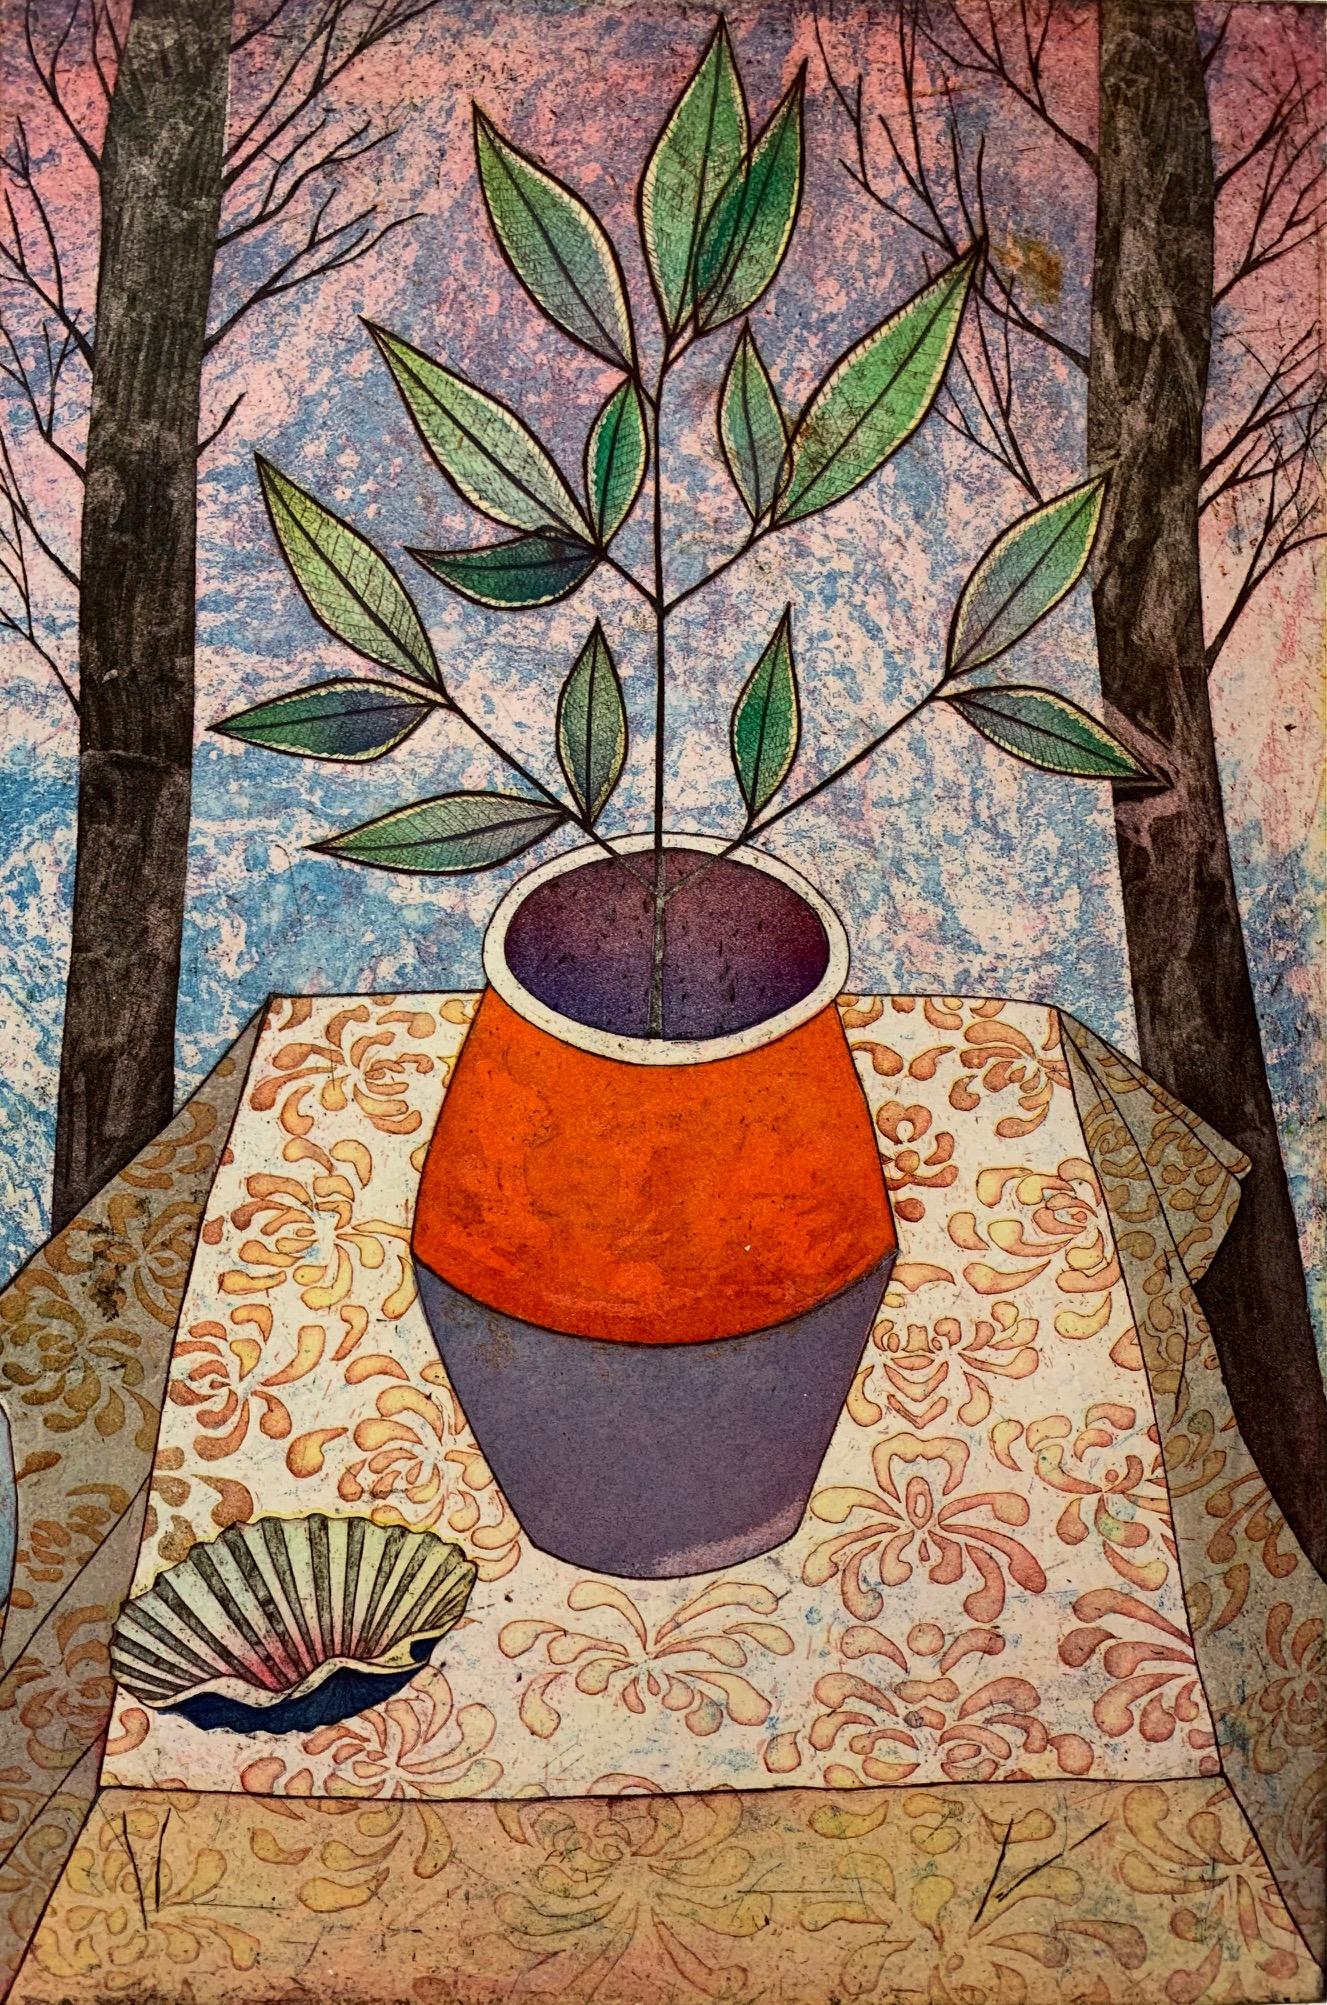 V's Vase, by Yuji Hiratsuka